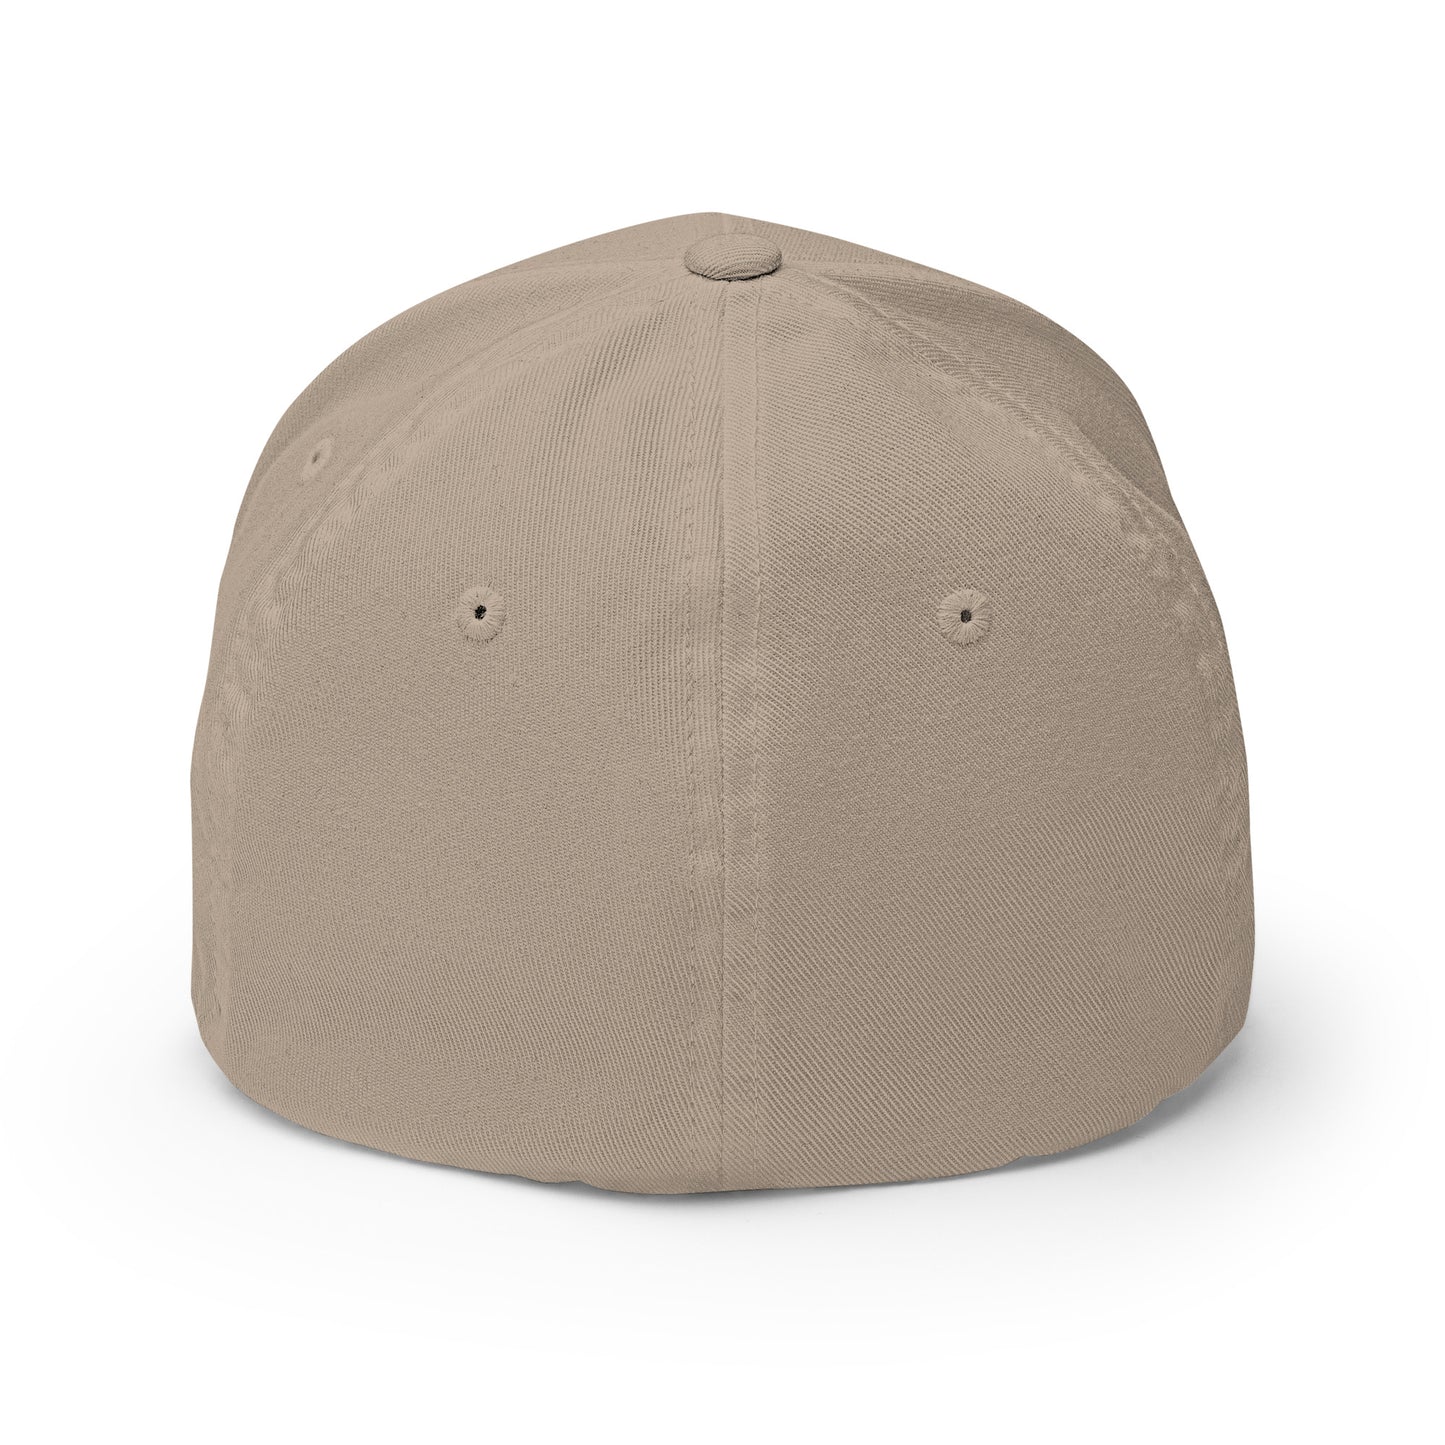 Baseball Cap with Griff Symbol